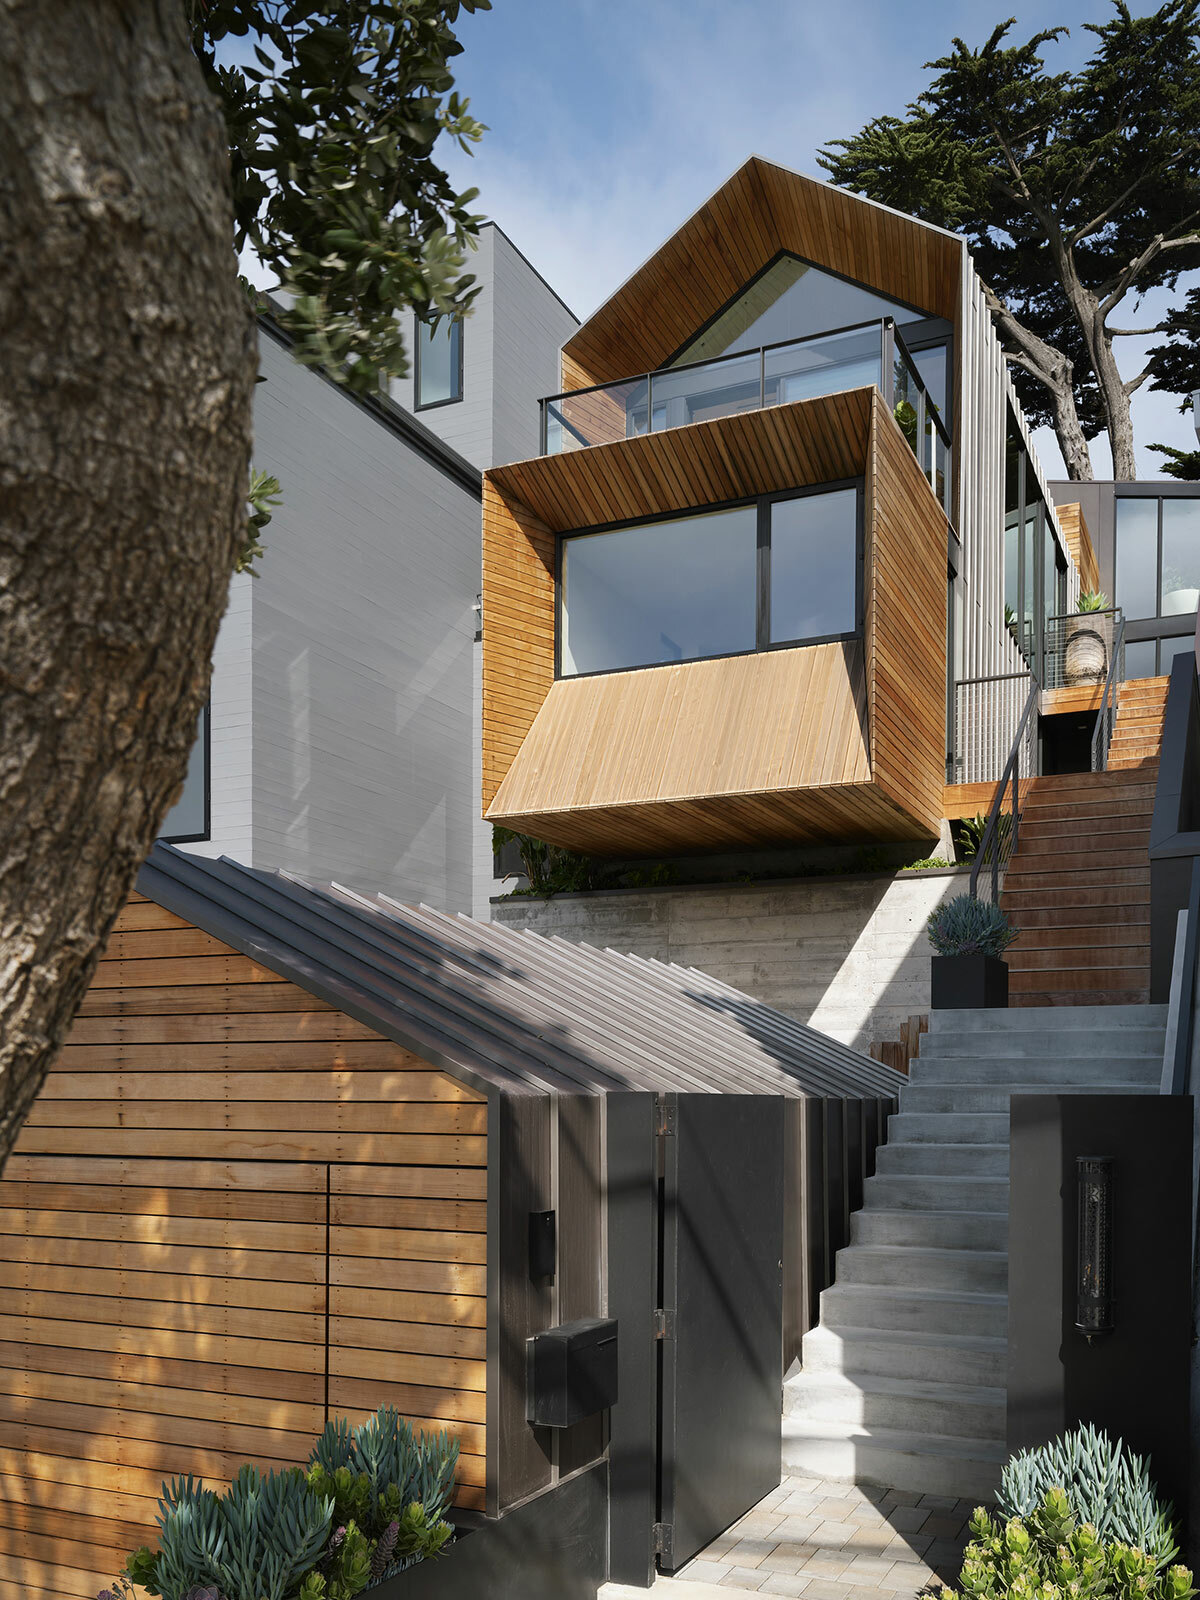 jones | haydu revives san francisco home with stepping cedar boxes